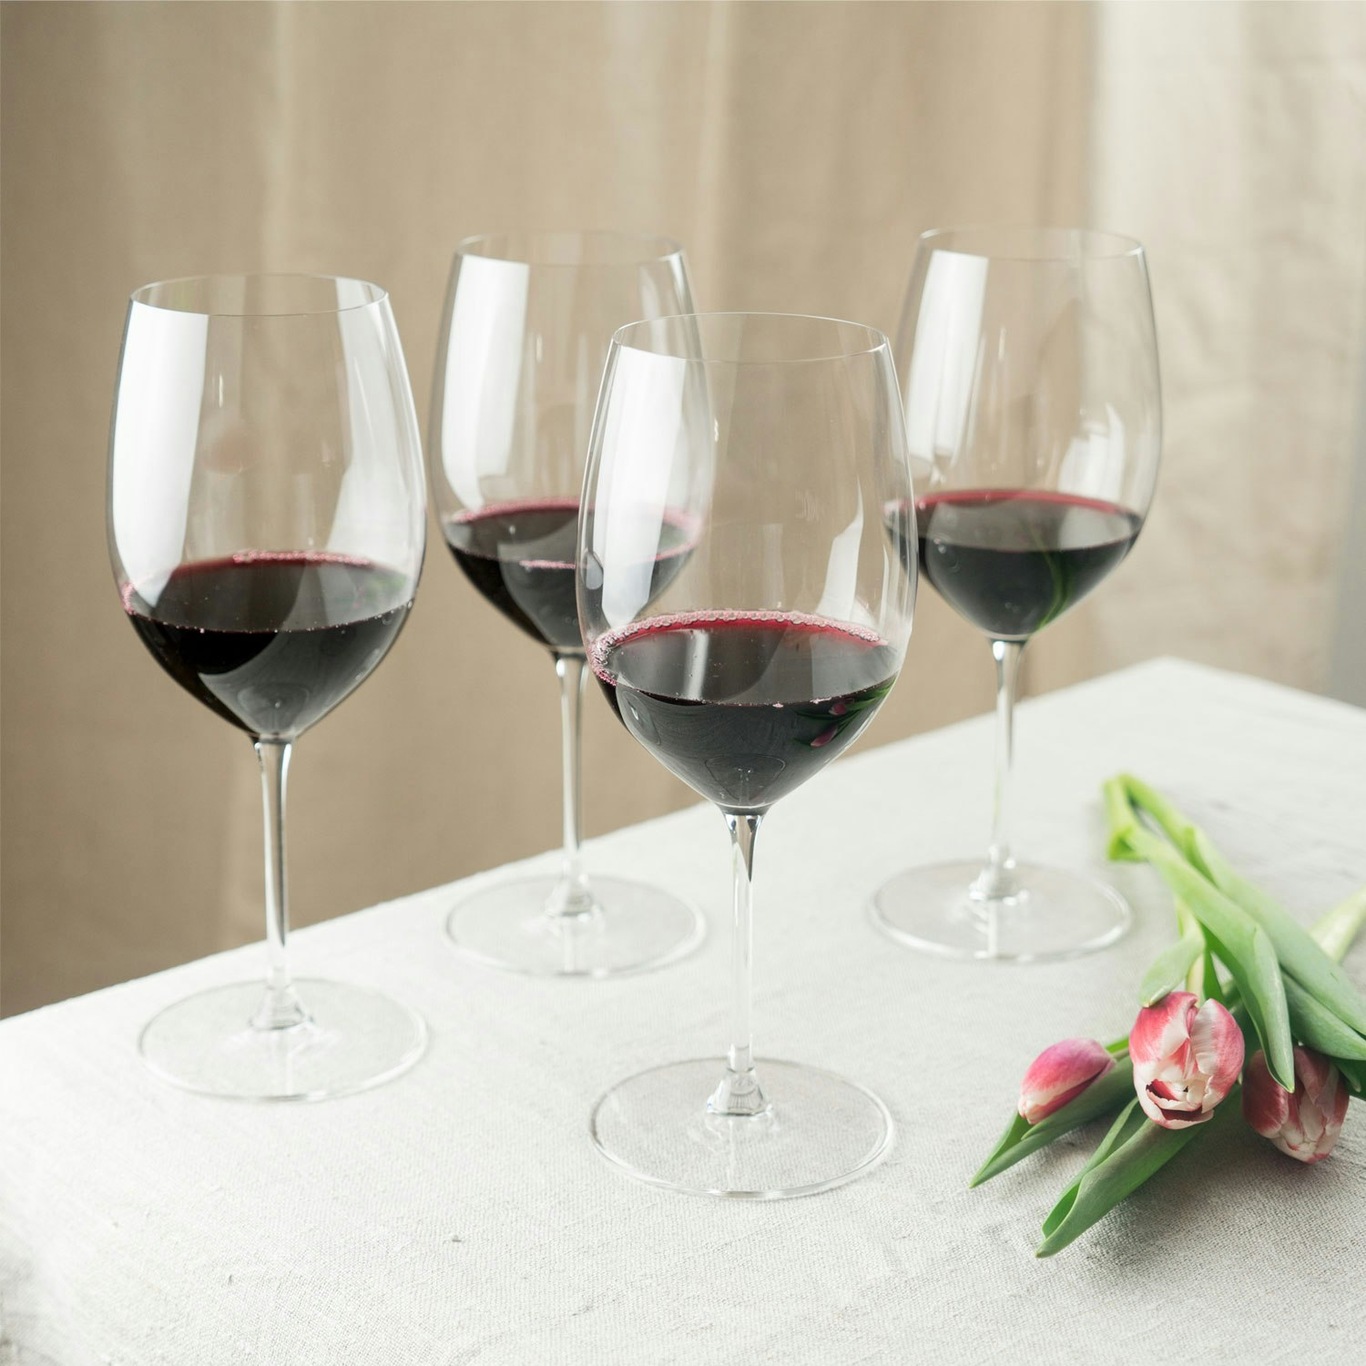 https://royaldesign.com/image/11/riedel-four-265th-anniversary-cabernet-merlot-wine-glasses-4-pack-1?w=800&quality=80